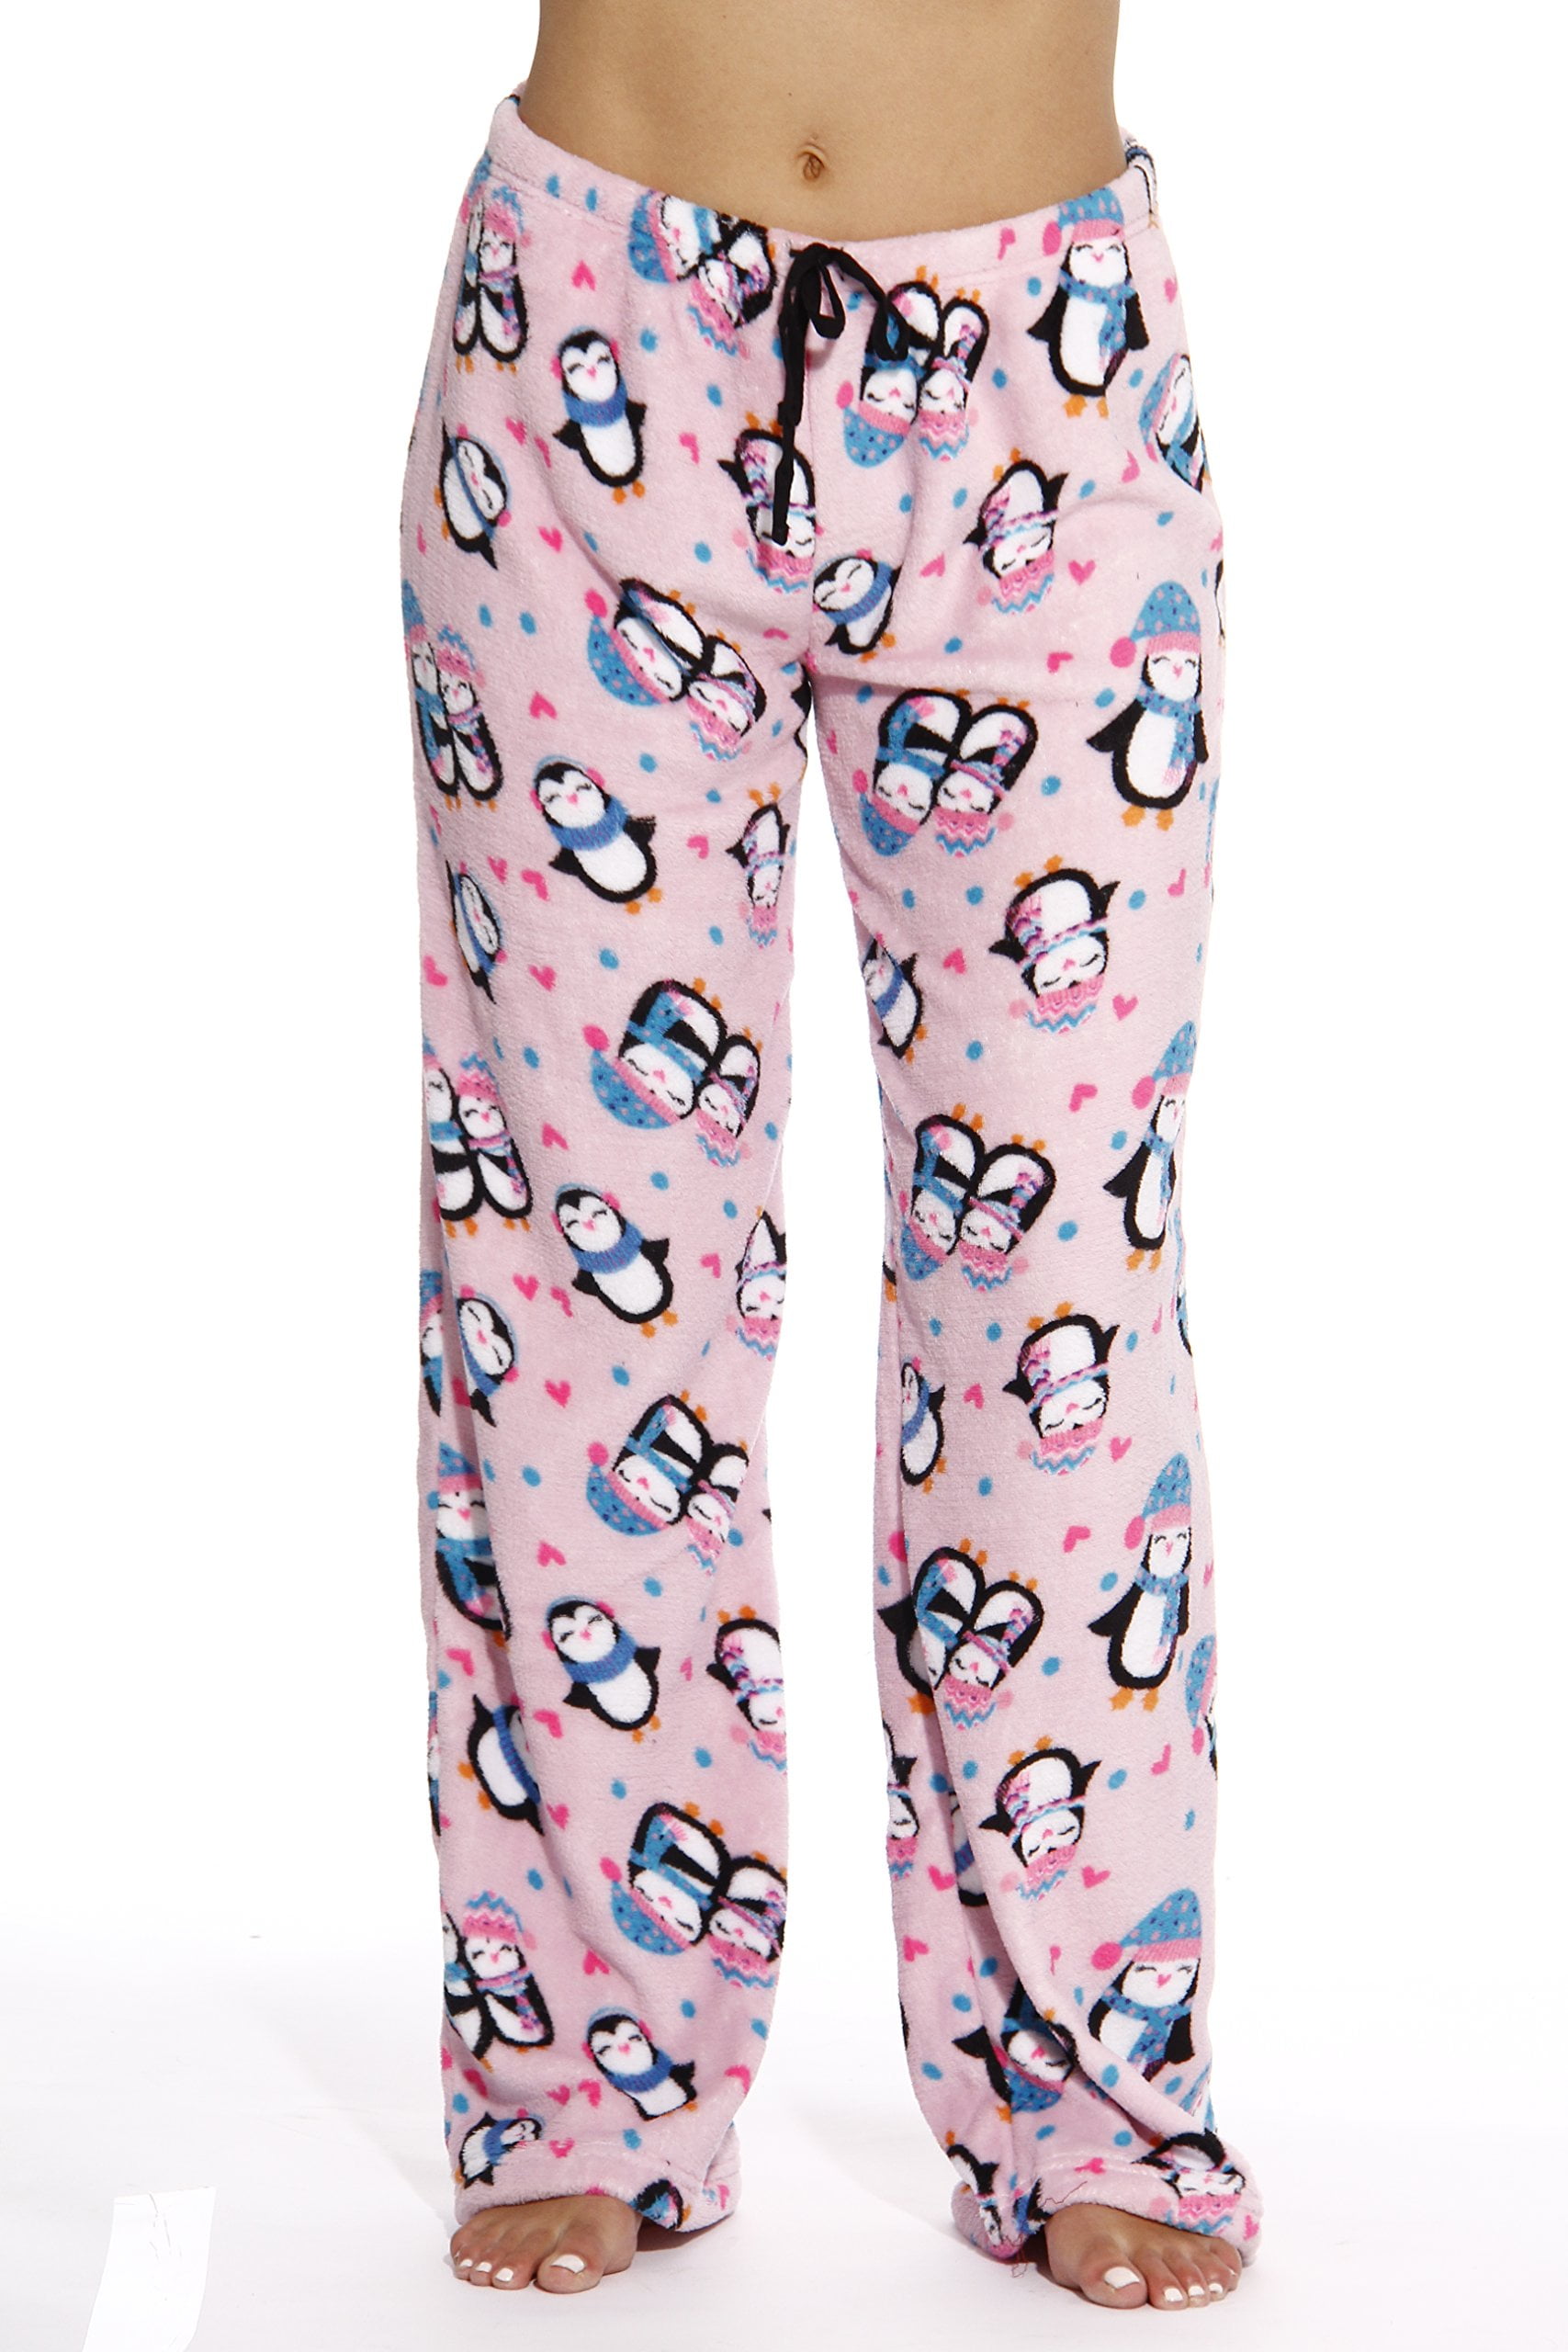 Cute Penguin Cartoon Pajama Pants For Women Pjs Bottoms Wide Leg